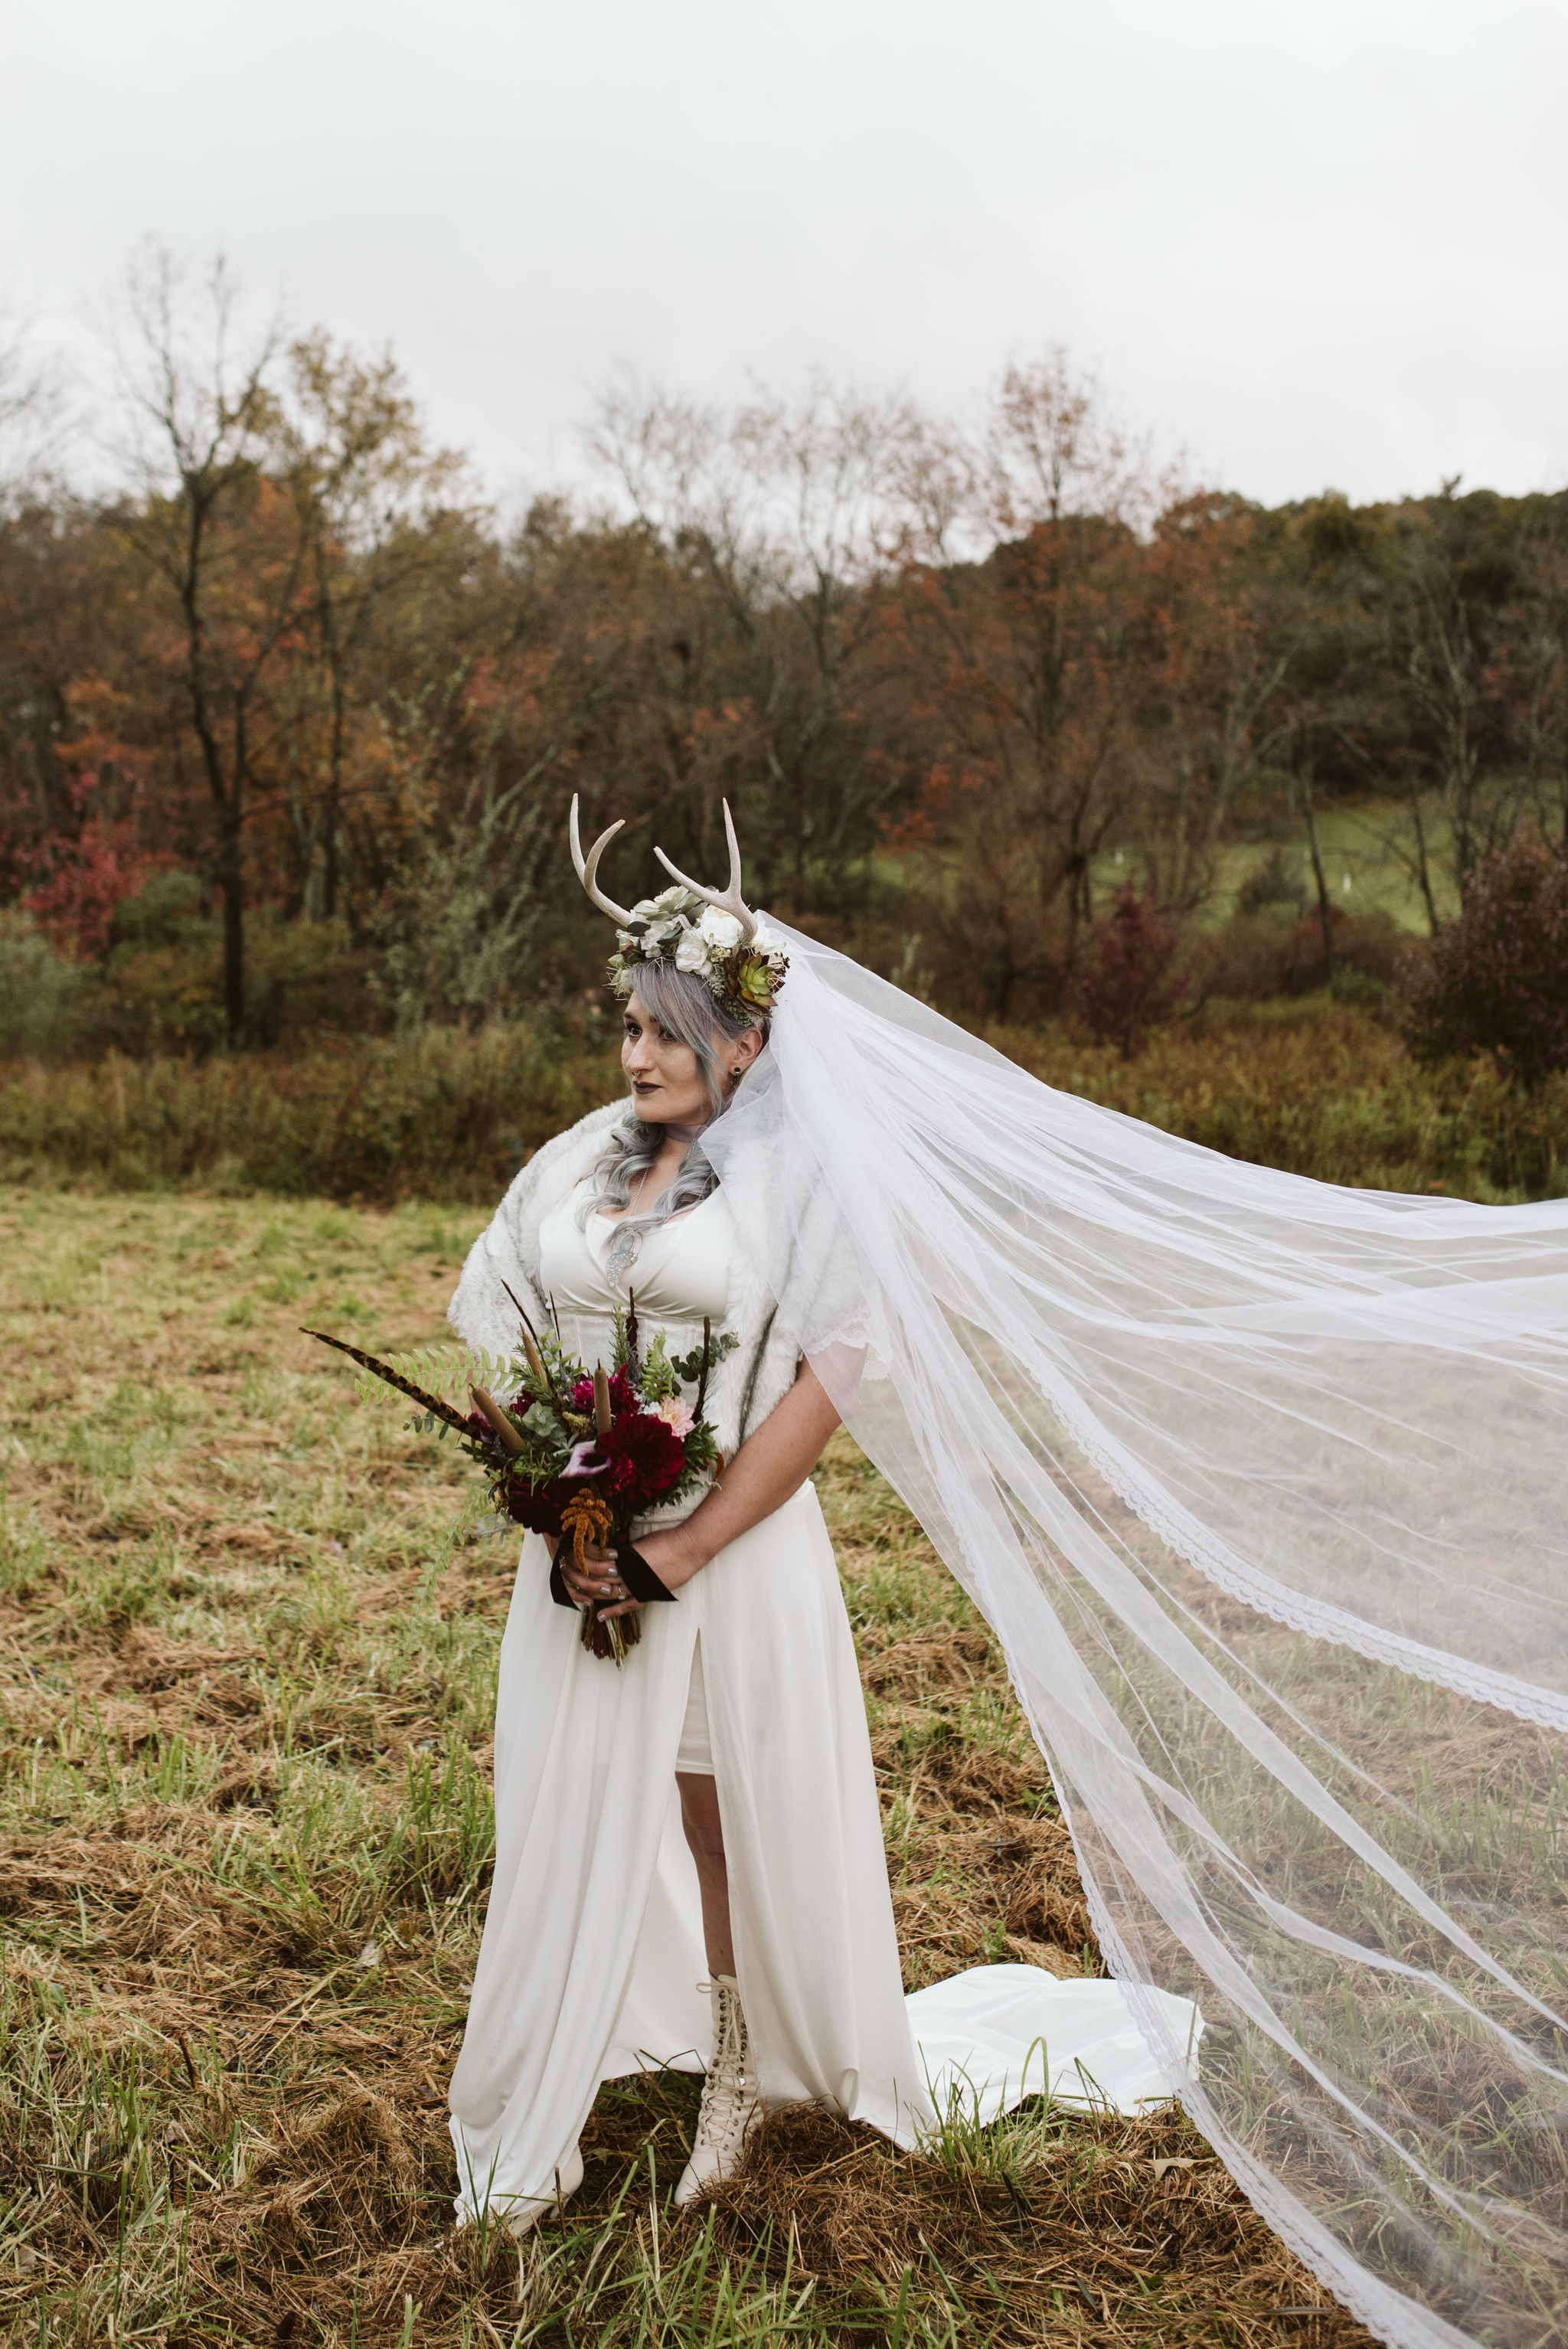  Maryland, Baltimore Wedding Photographer, Backyard Wedding, Fall, October, Dark Bohemian, Whimsical, Fun, Portrait of Bride in Field, Long Lace Veil, Fur Wrap, Flower Crown, The Modest Florist 